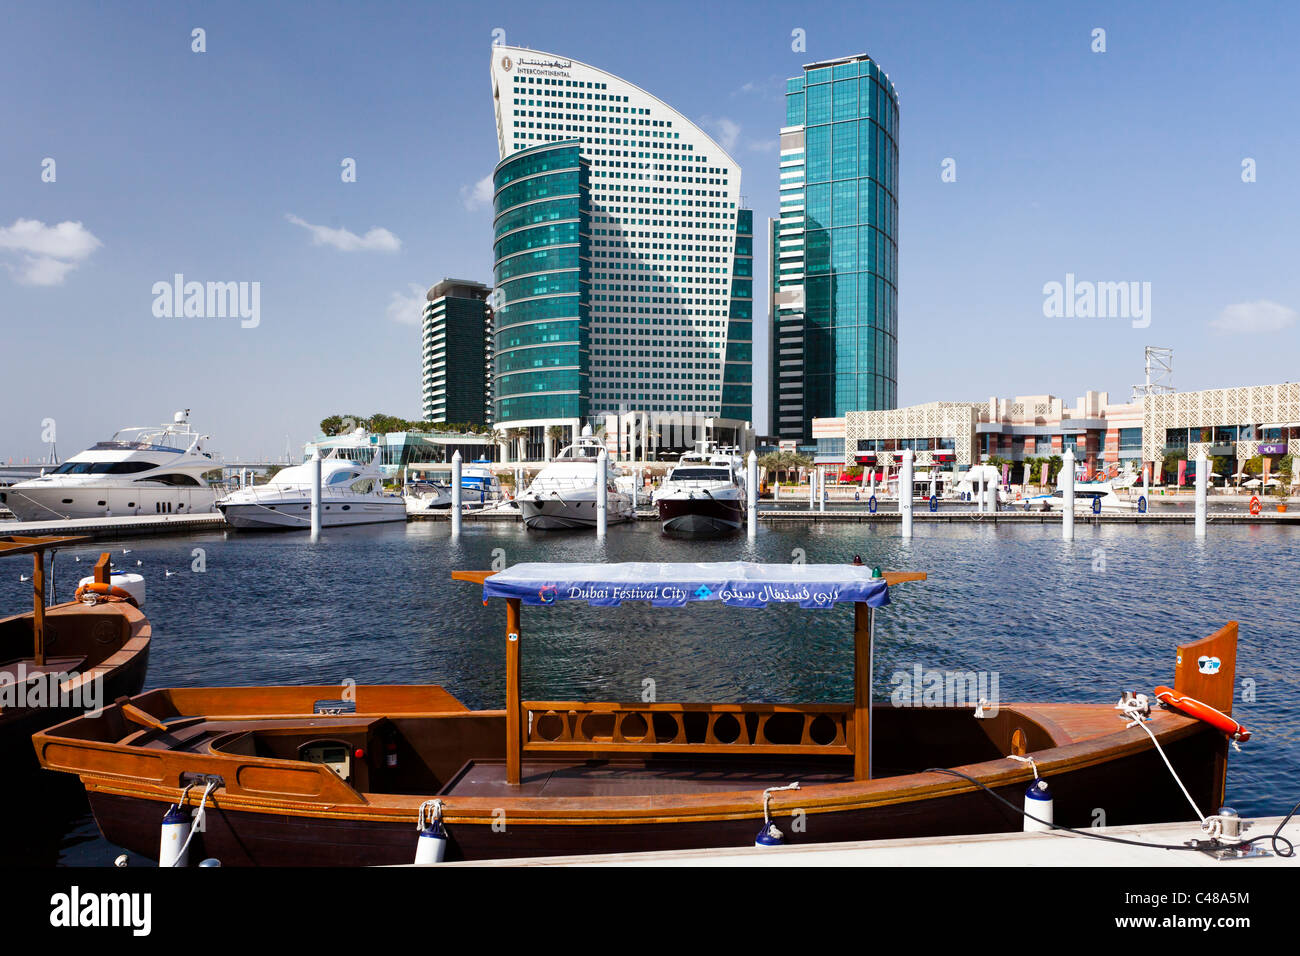 The Festival City marina with the Intercontinental Hotel in Dubai, UAE, Persian Gulf. Stock Photo